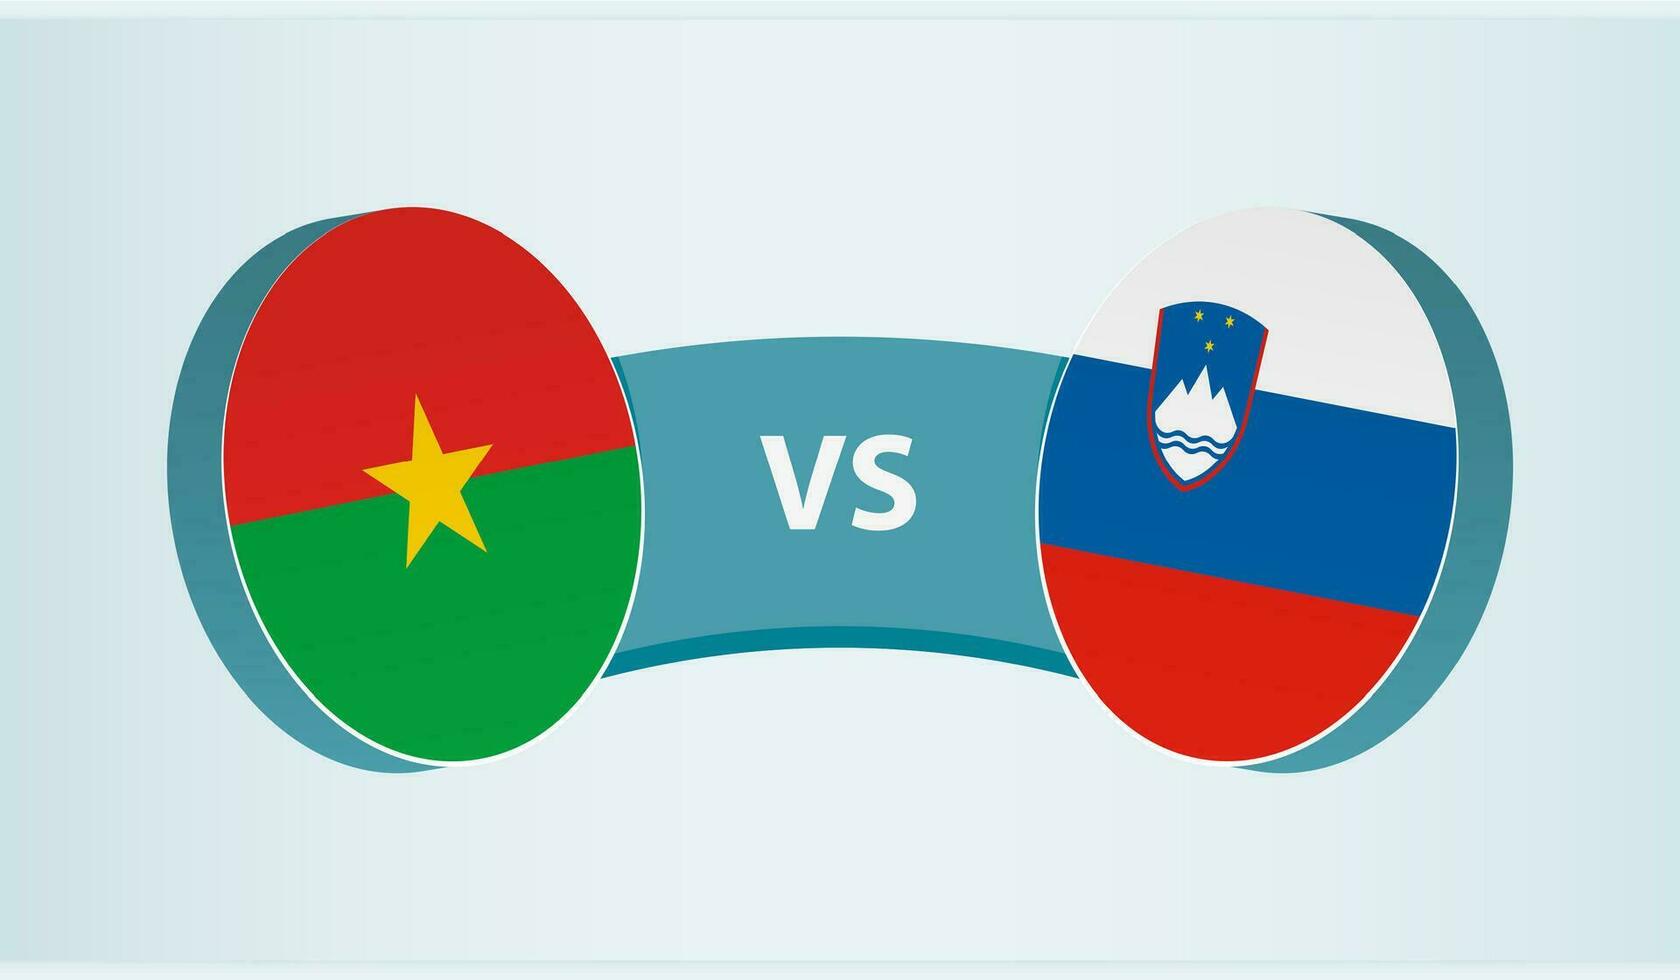 Burkina Faso versus Slovenia, team sports competition concept. vector